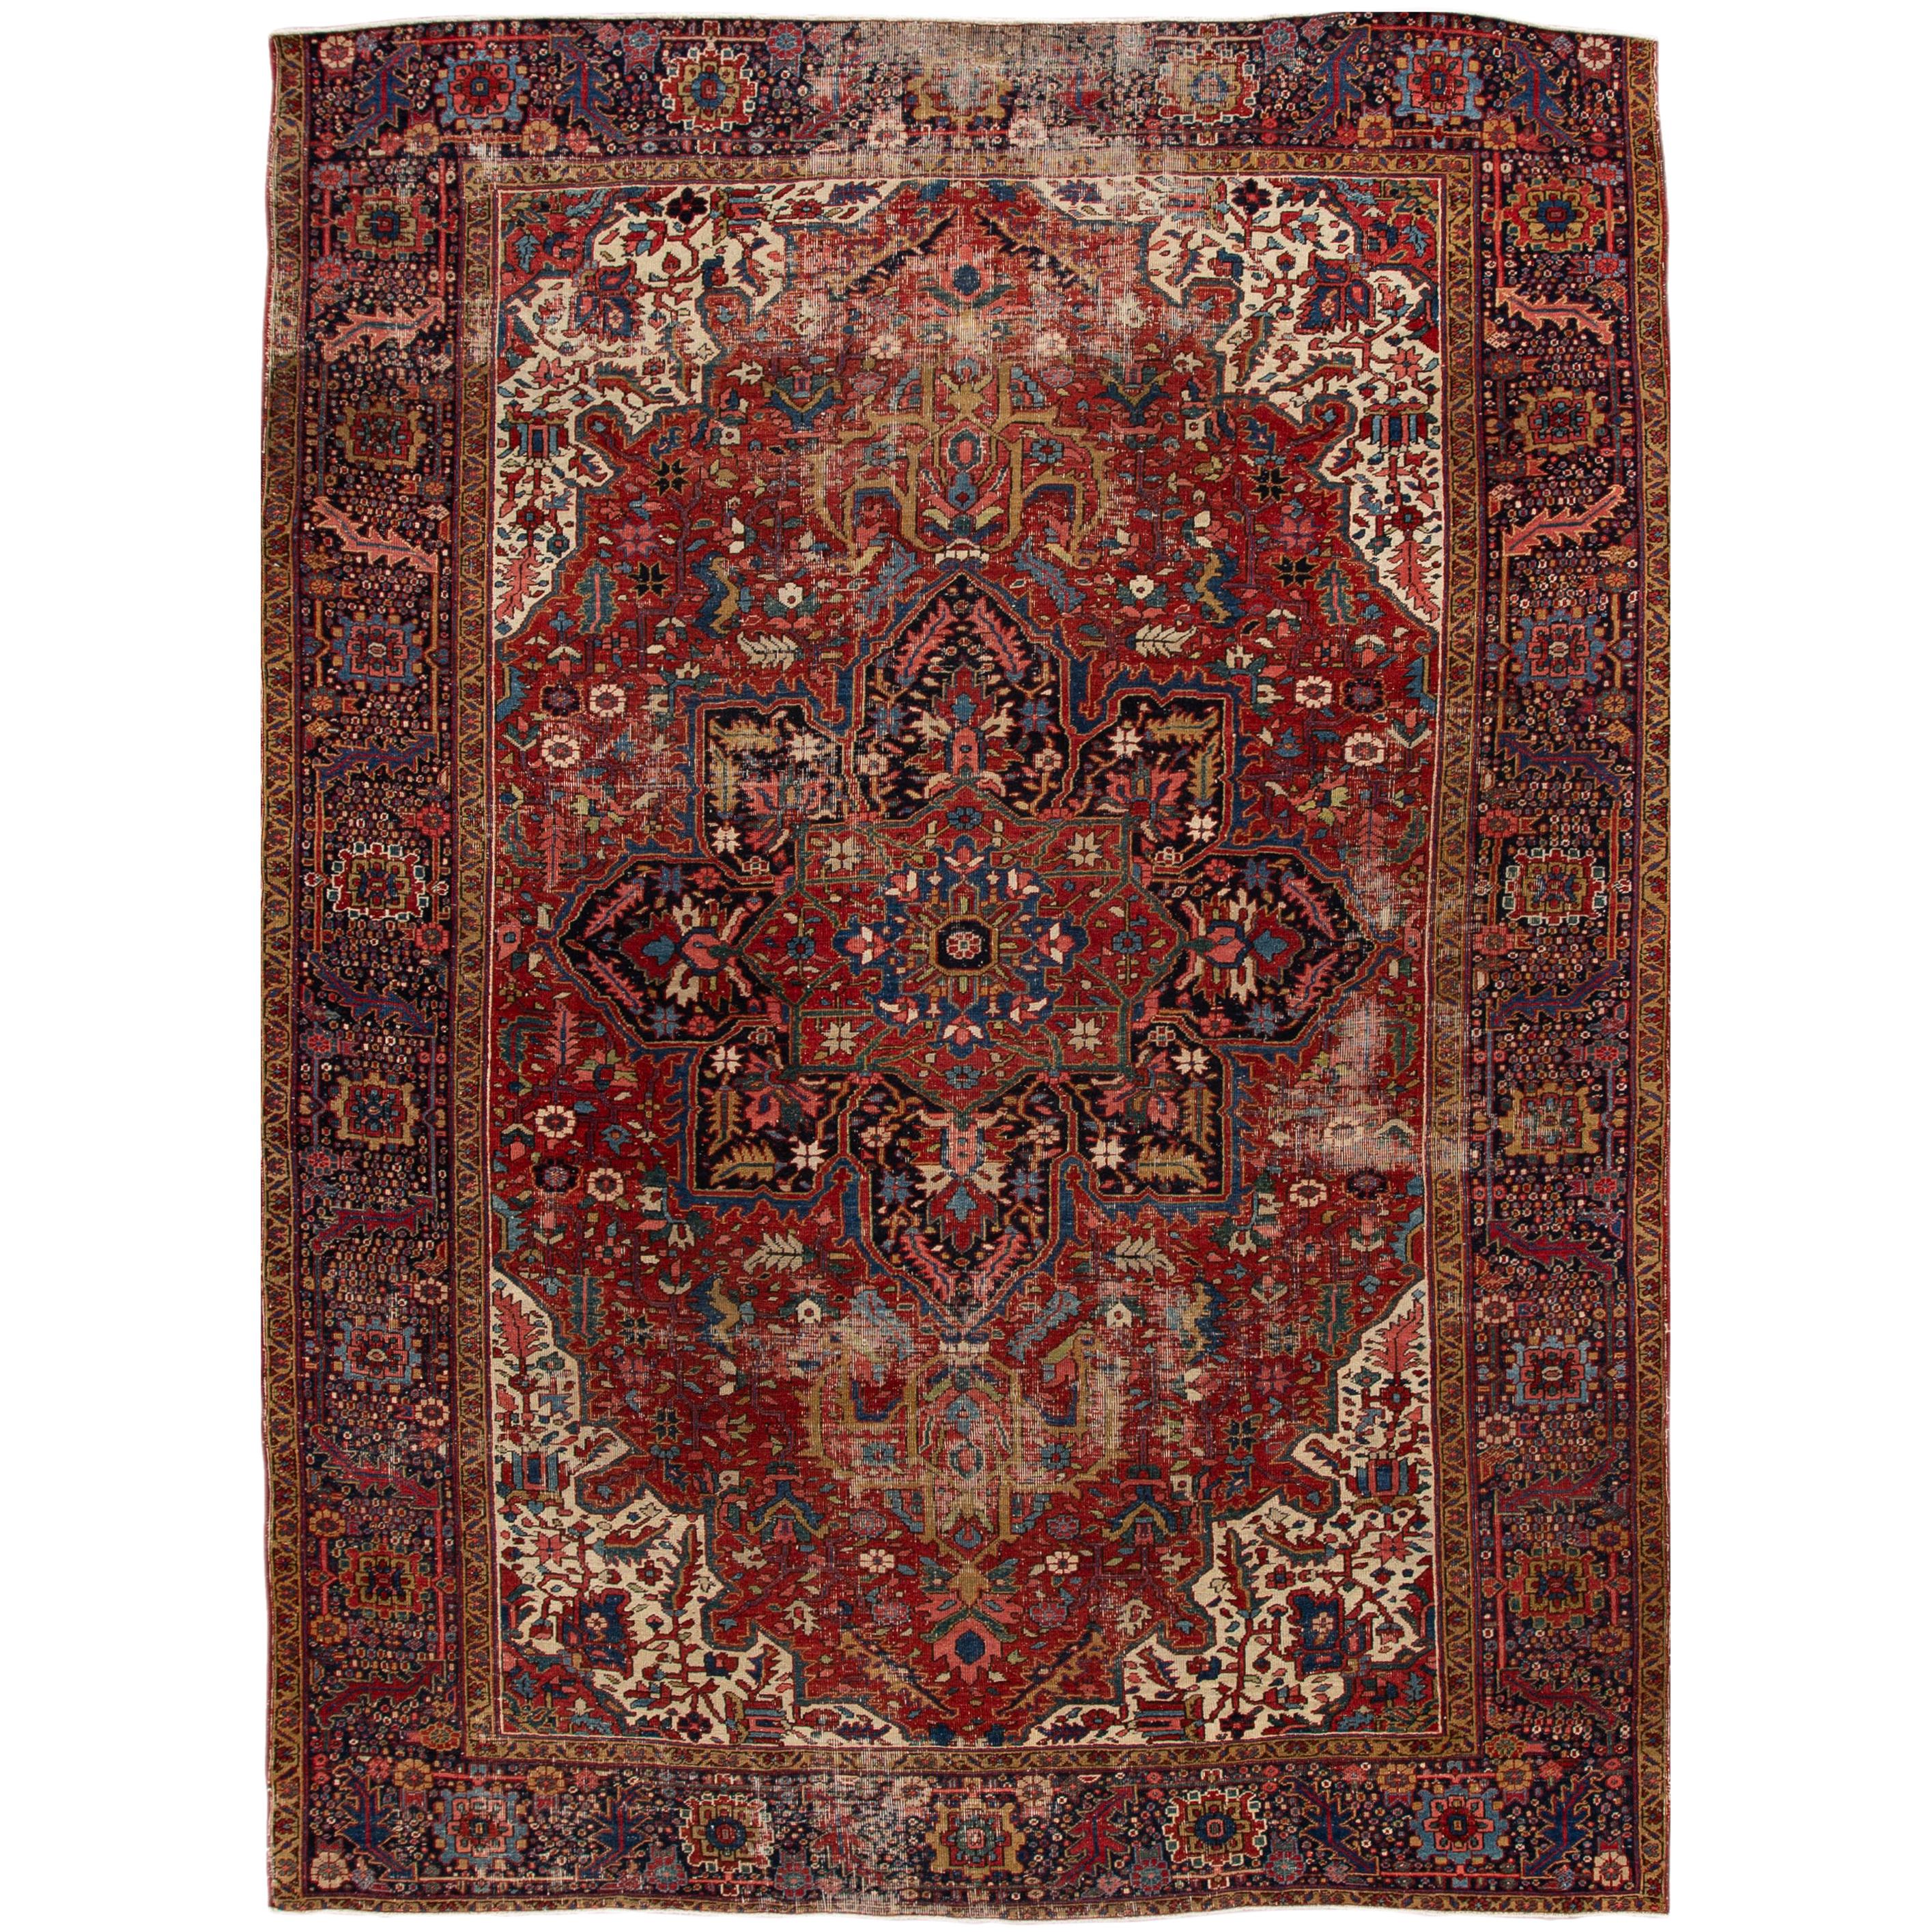 Early 20th Century Antique Persian Heriz Wool Rug